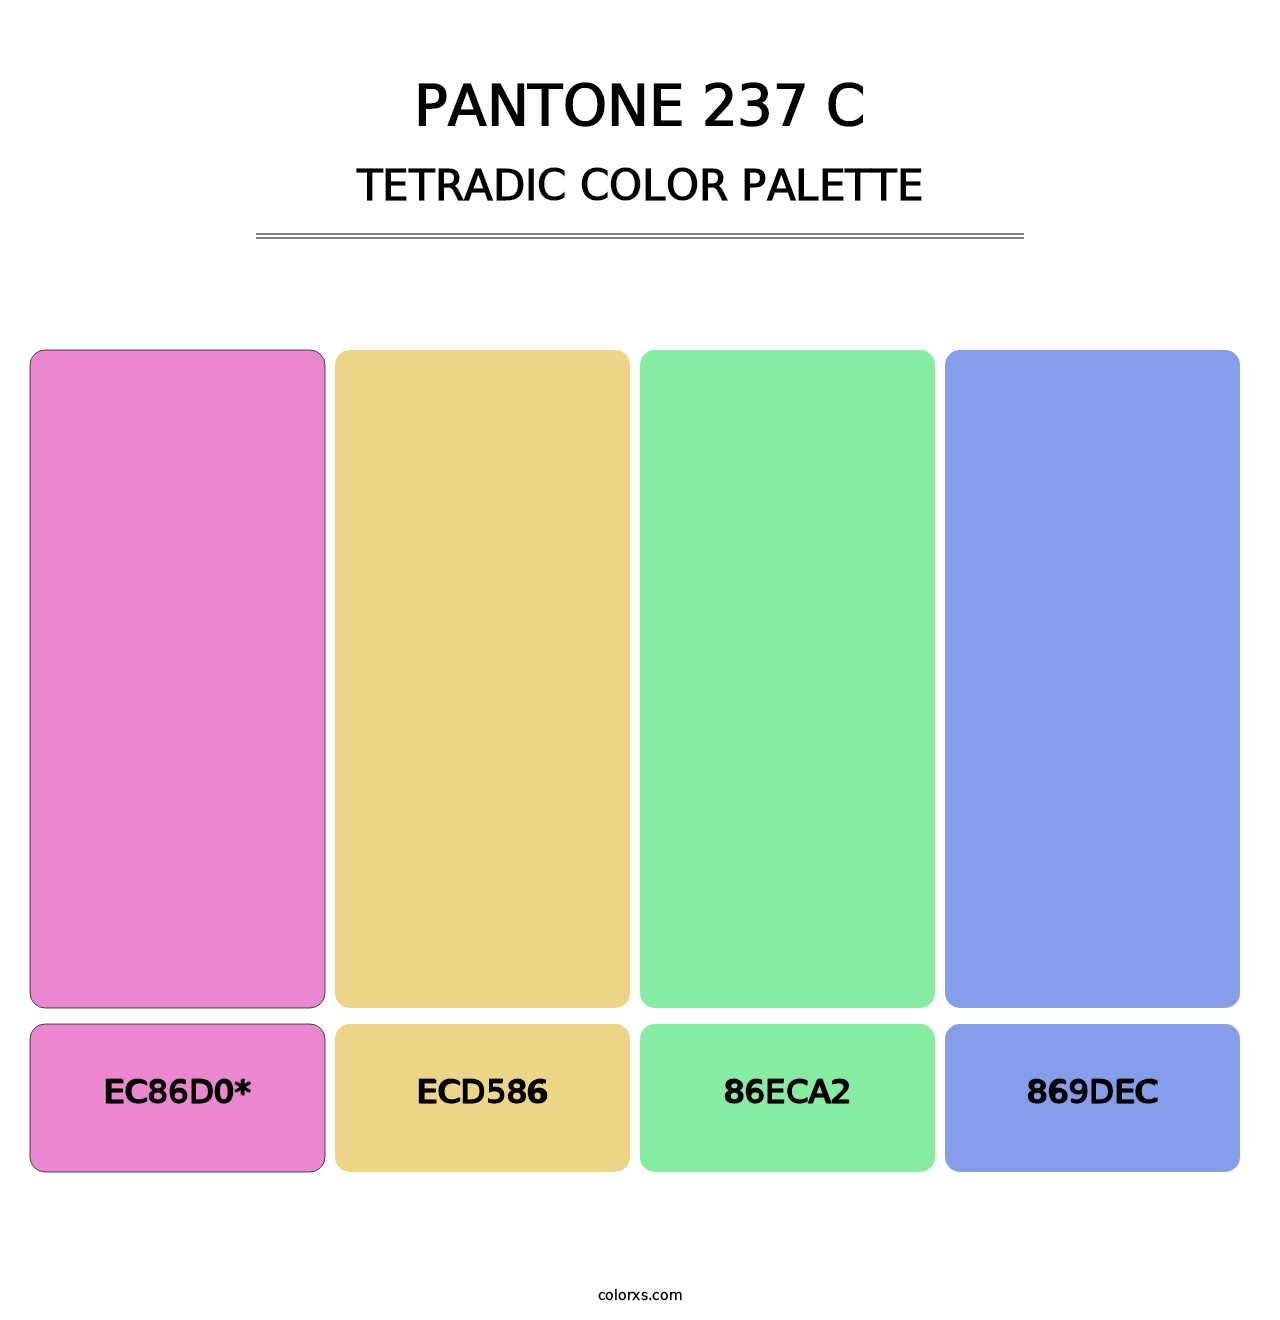 PANTONE 237 C - Tetradic Color Palette